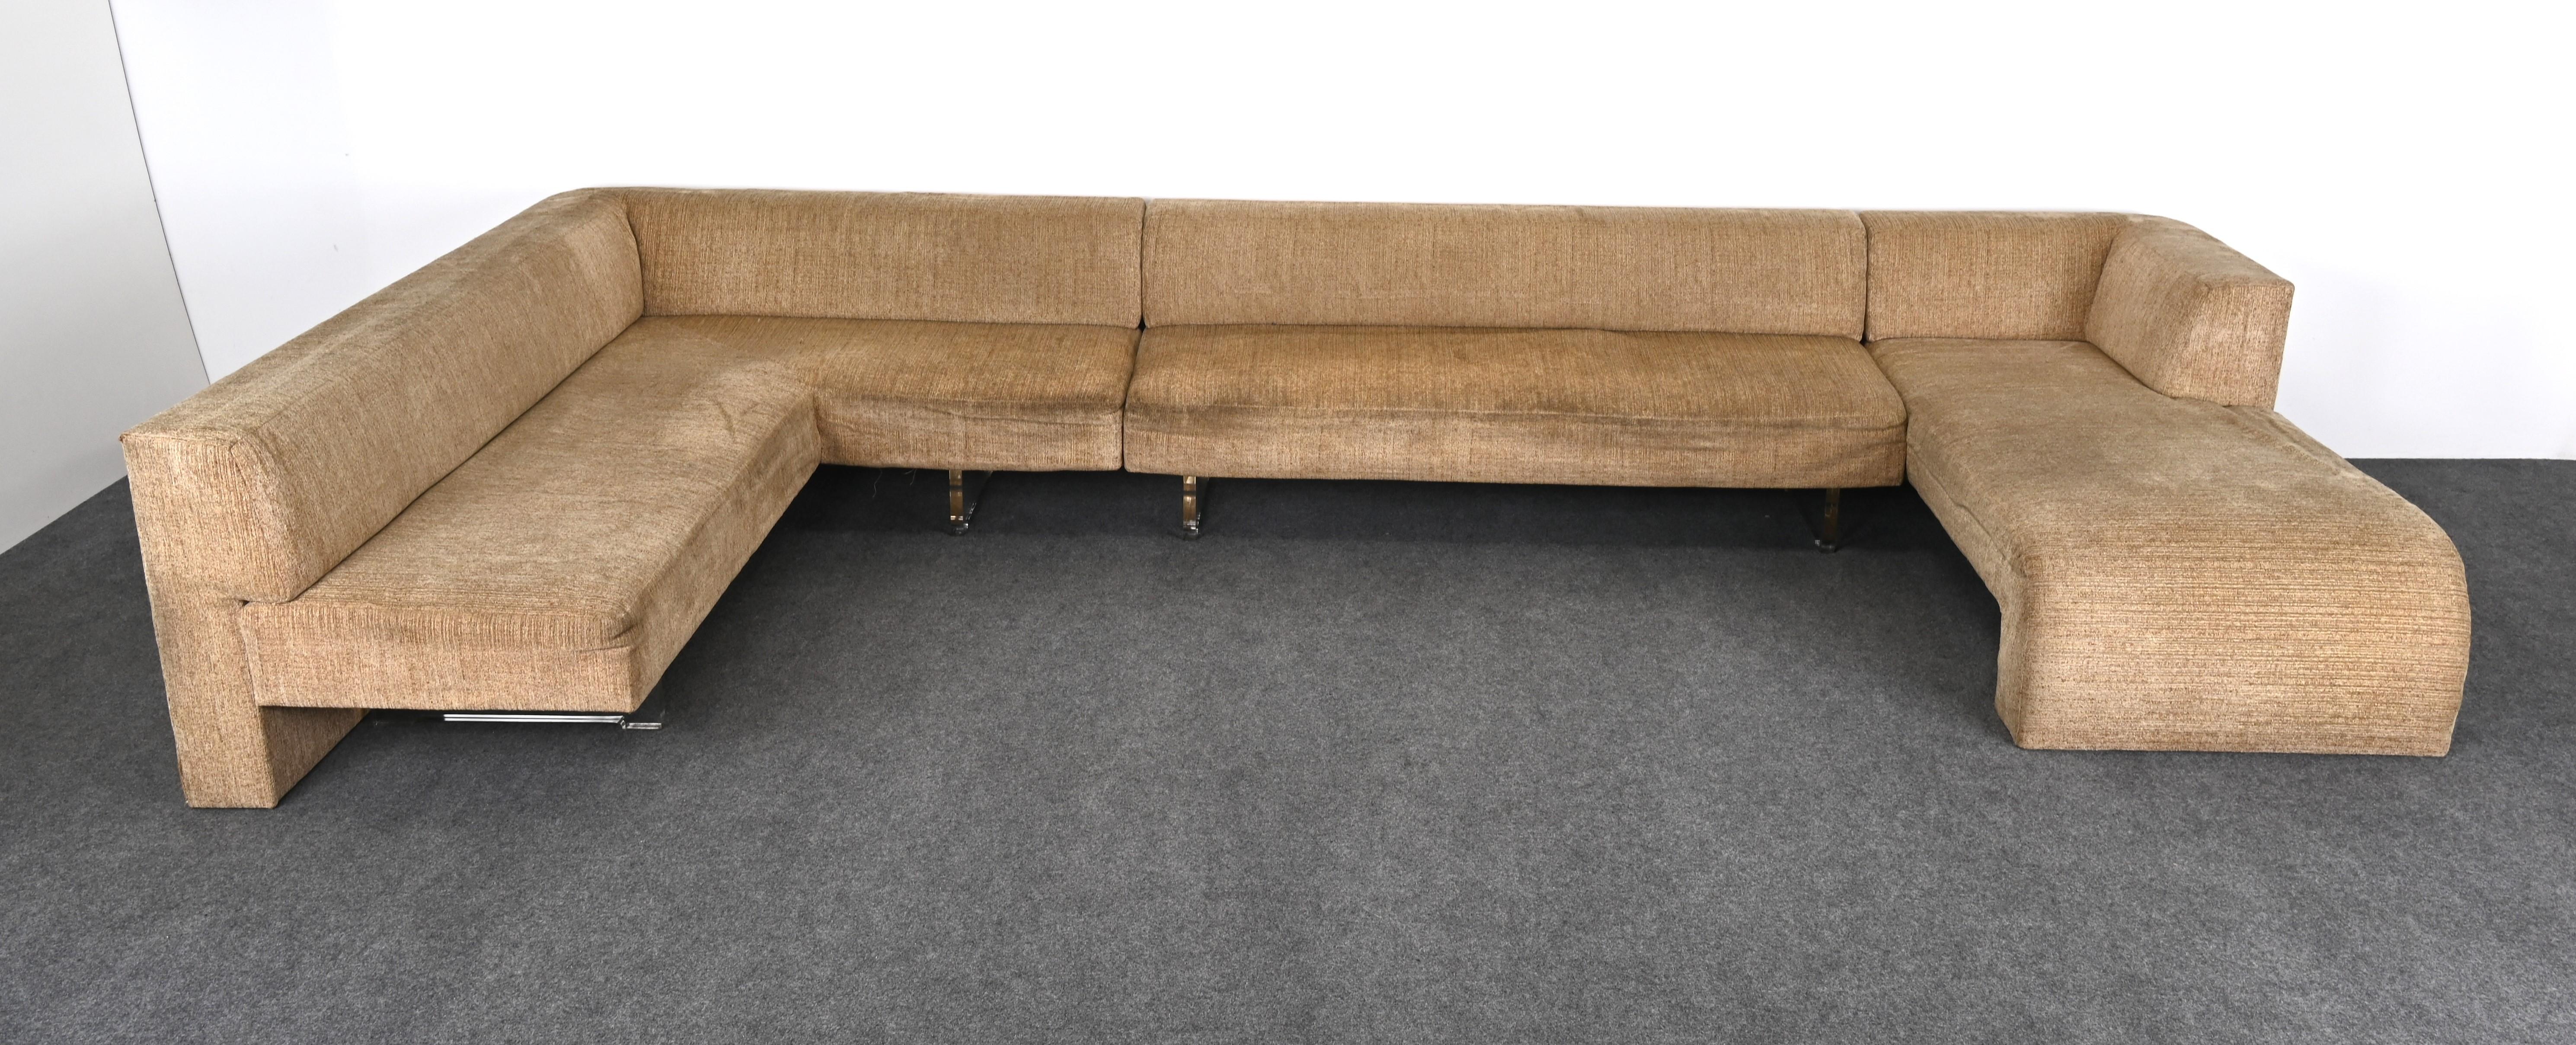 Mid-Century Modern Monumental Sectional Sofa Designed by Vladimir Kagan, 1970s For Sale